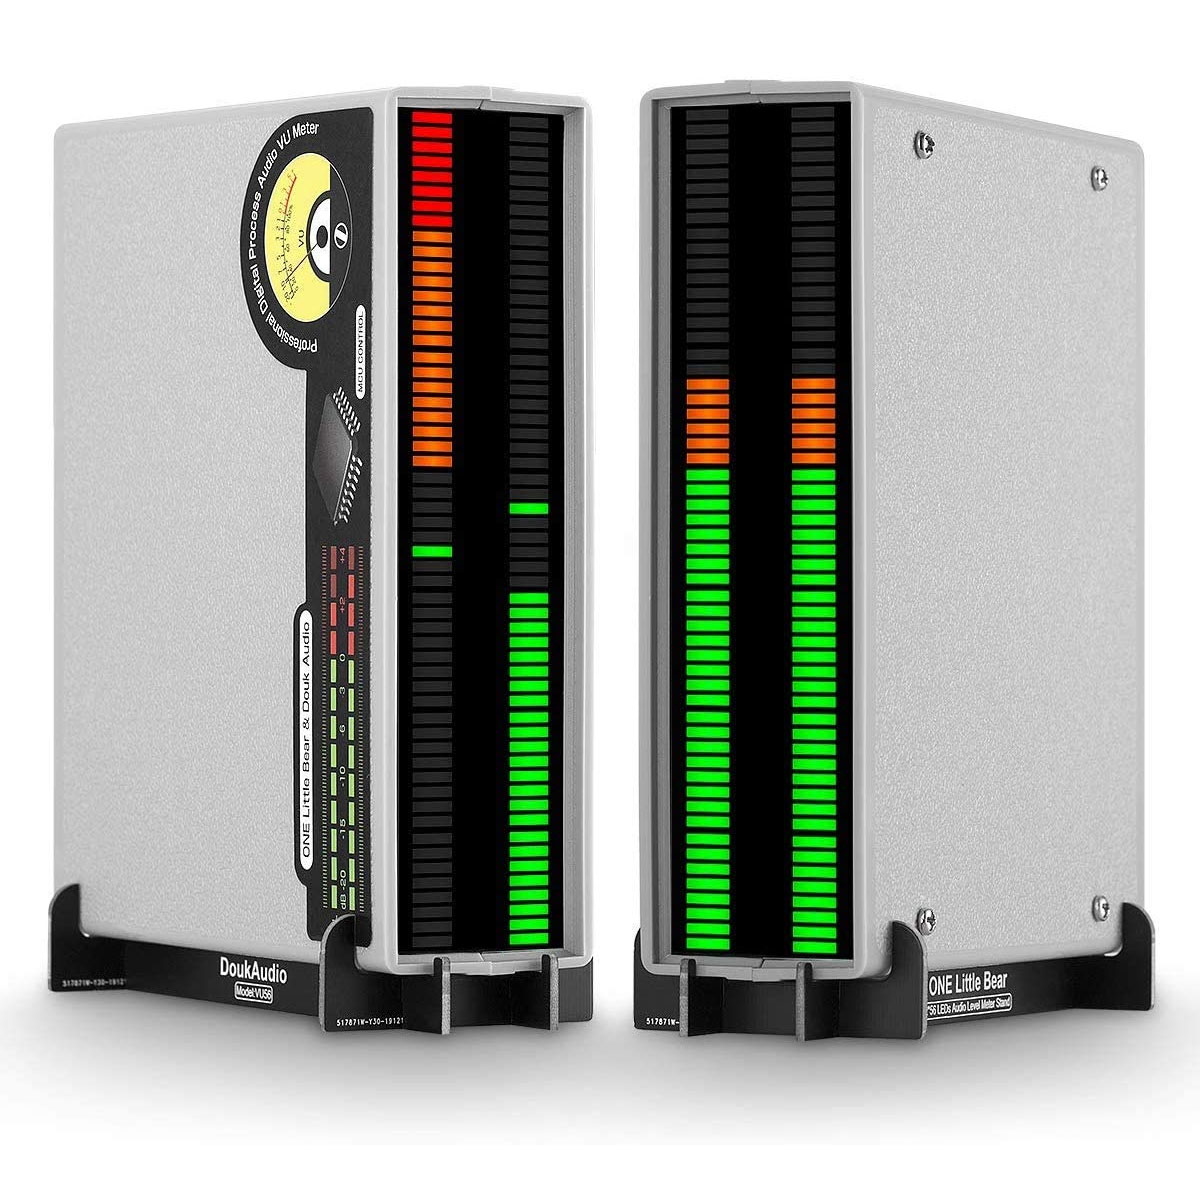 VU meter wskaźnik wysterowania LED audio stereoo